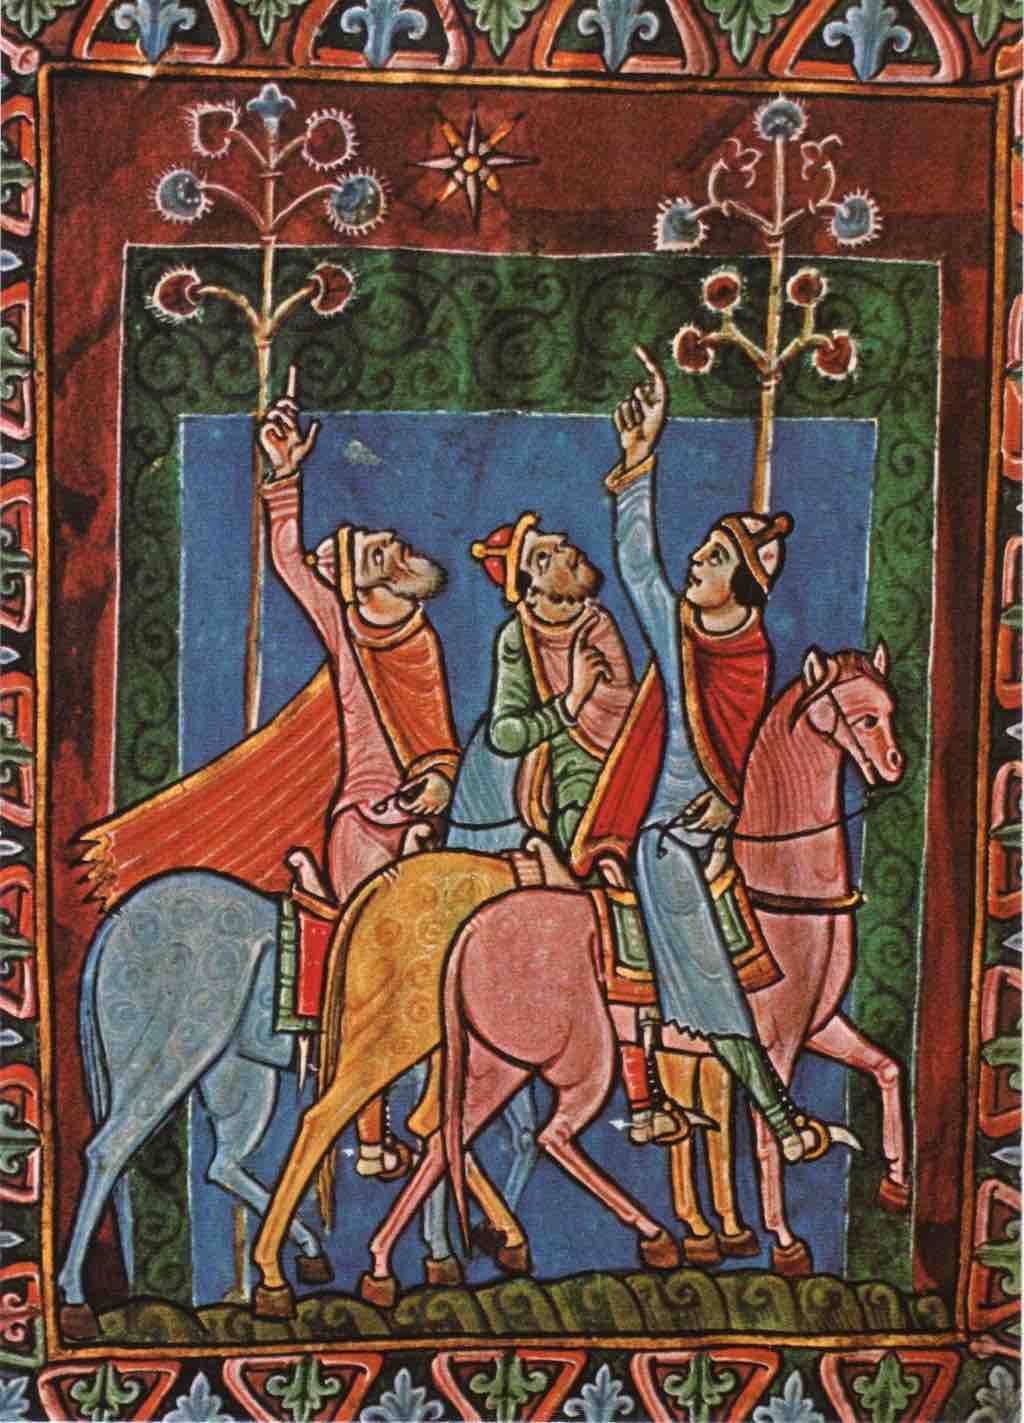 Illuminated Manuscript, The Three Magi from the St. Albans Psalter, Norman English, 12th century.